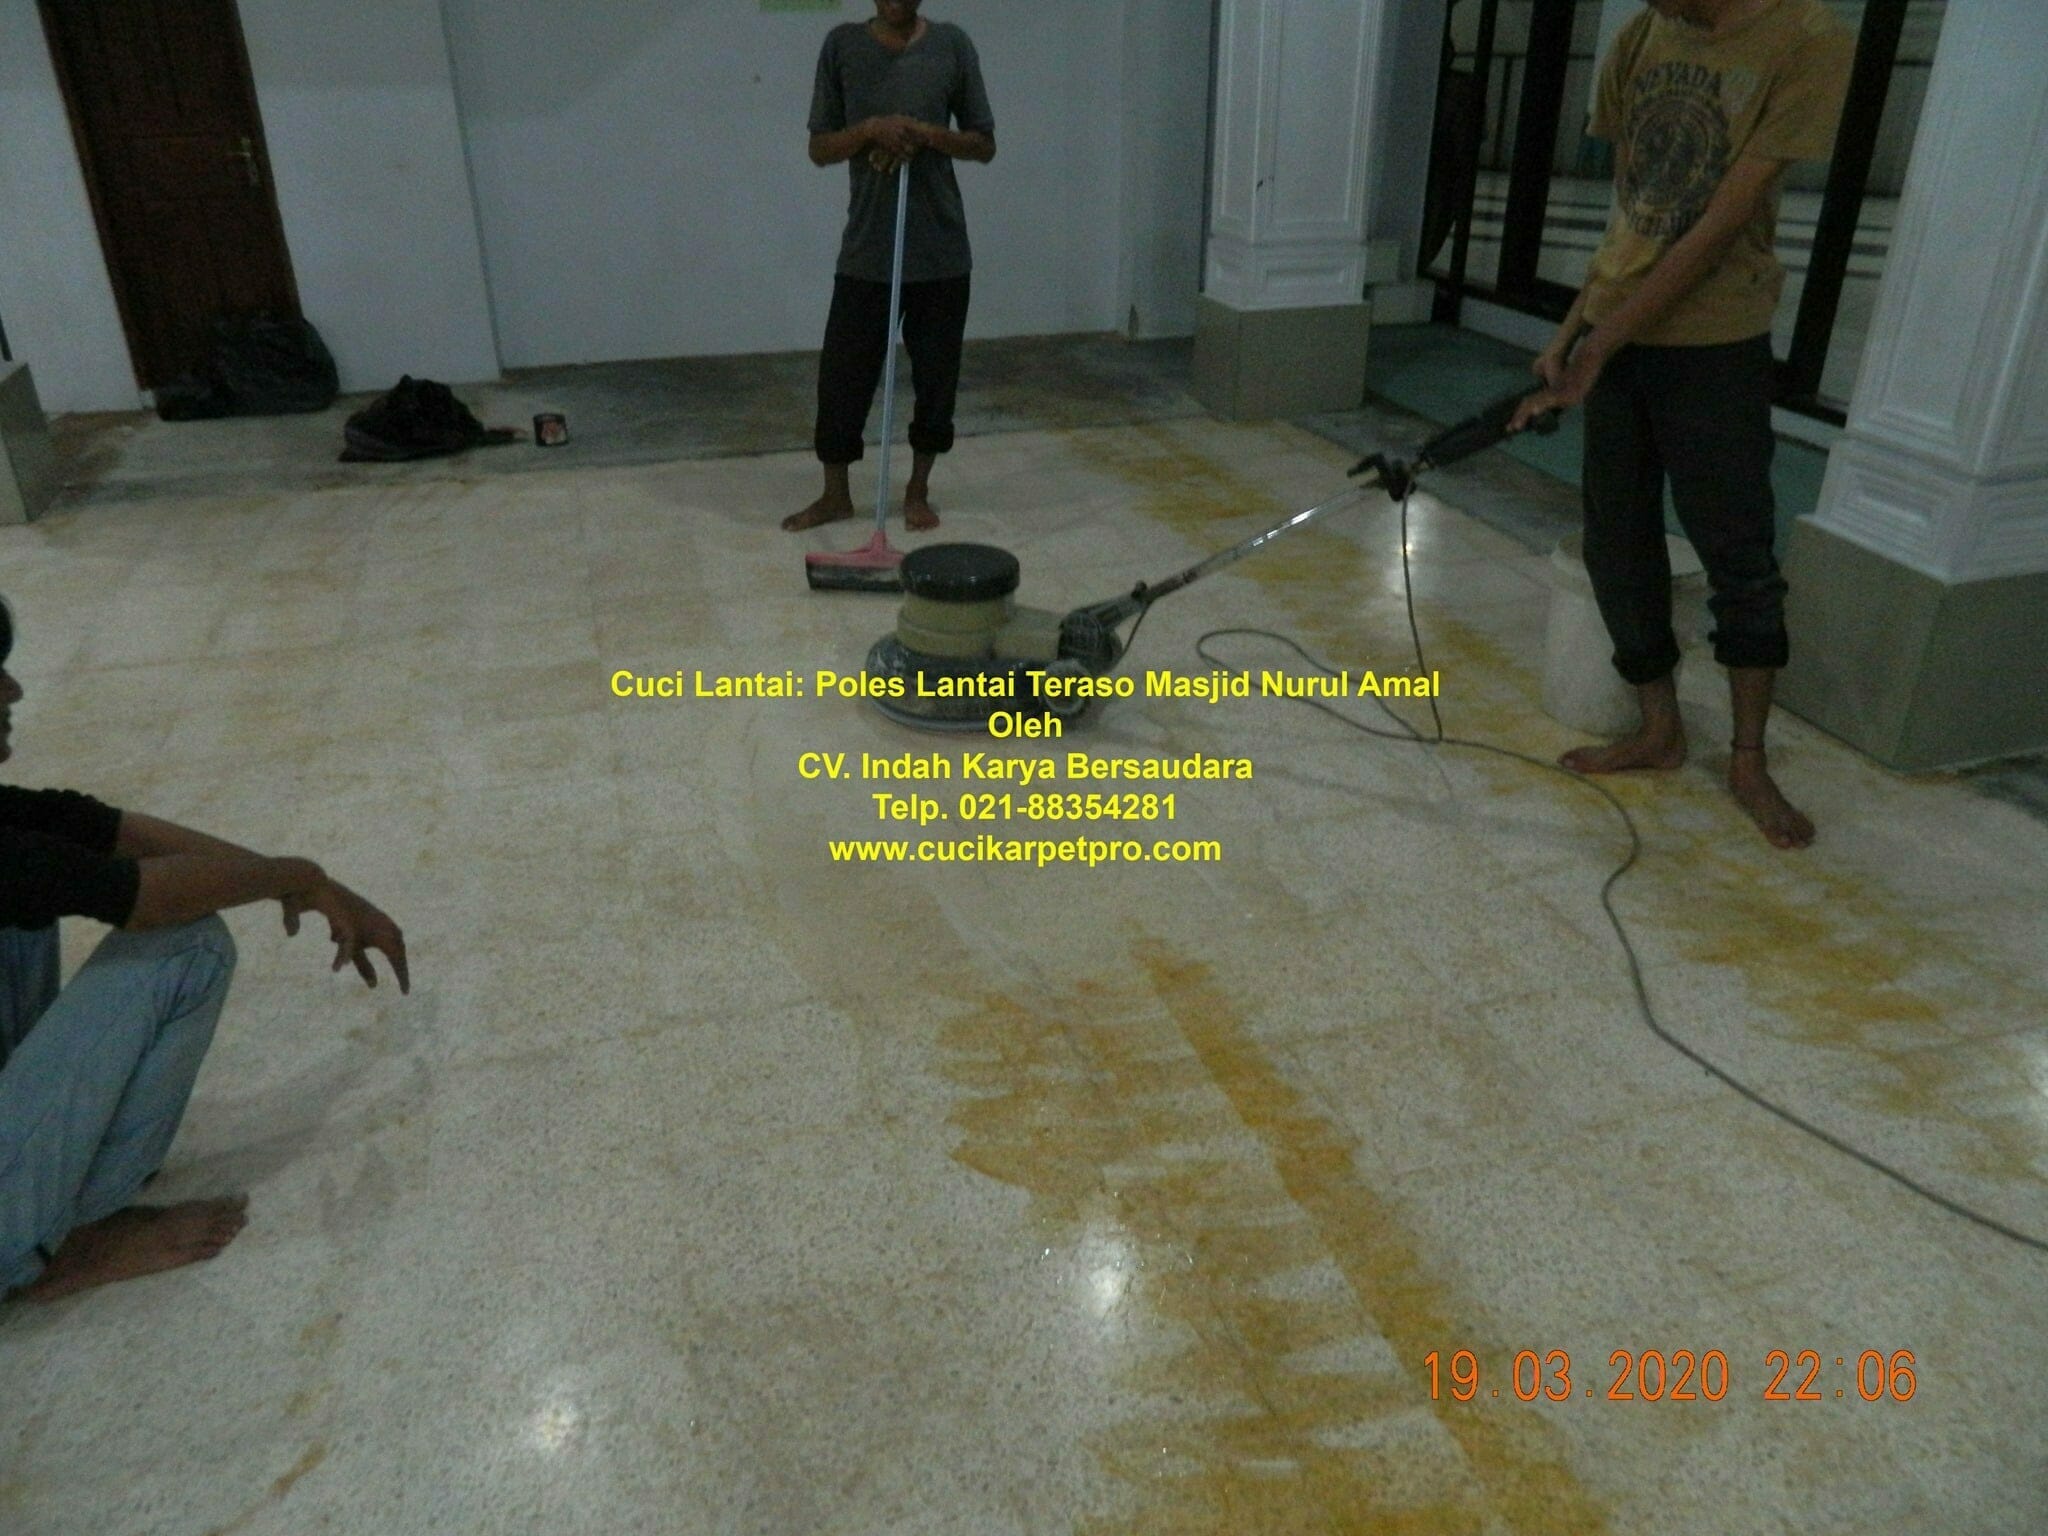 cuci lantai: poles lantai teraso masjid nurul amal 63